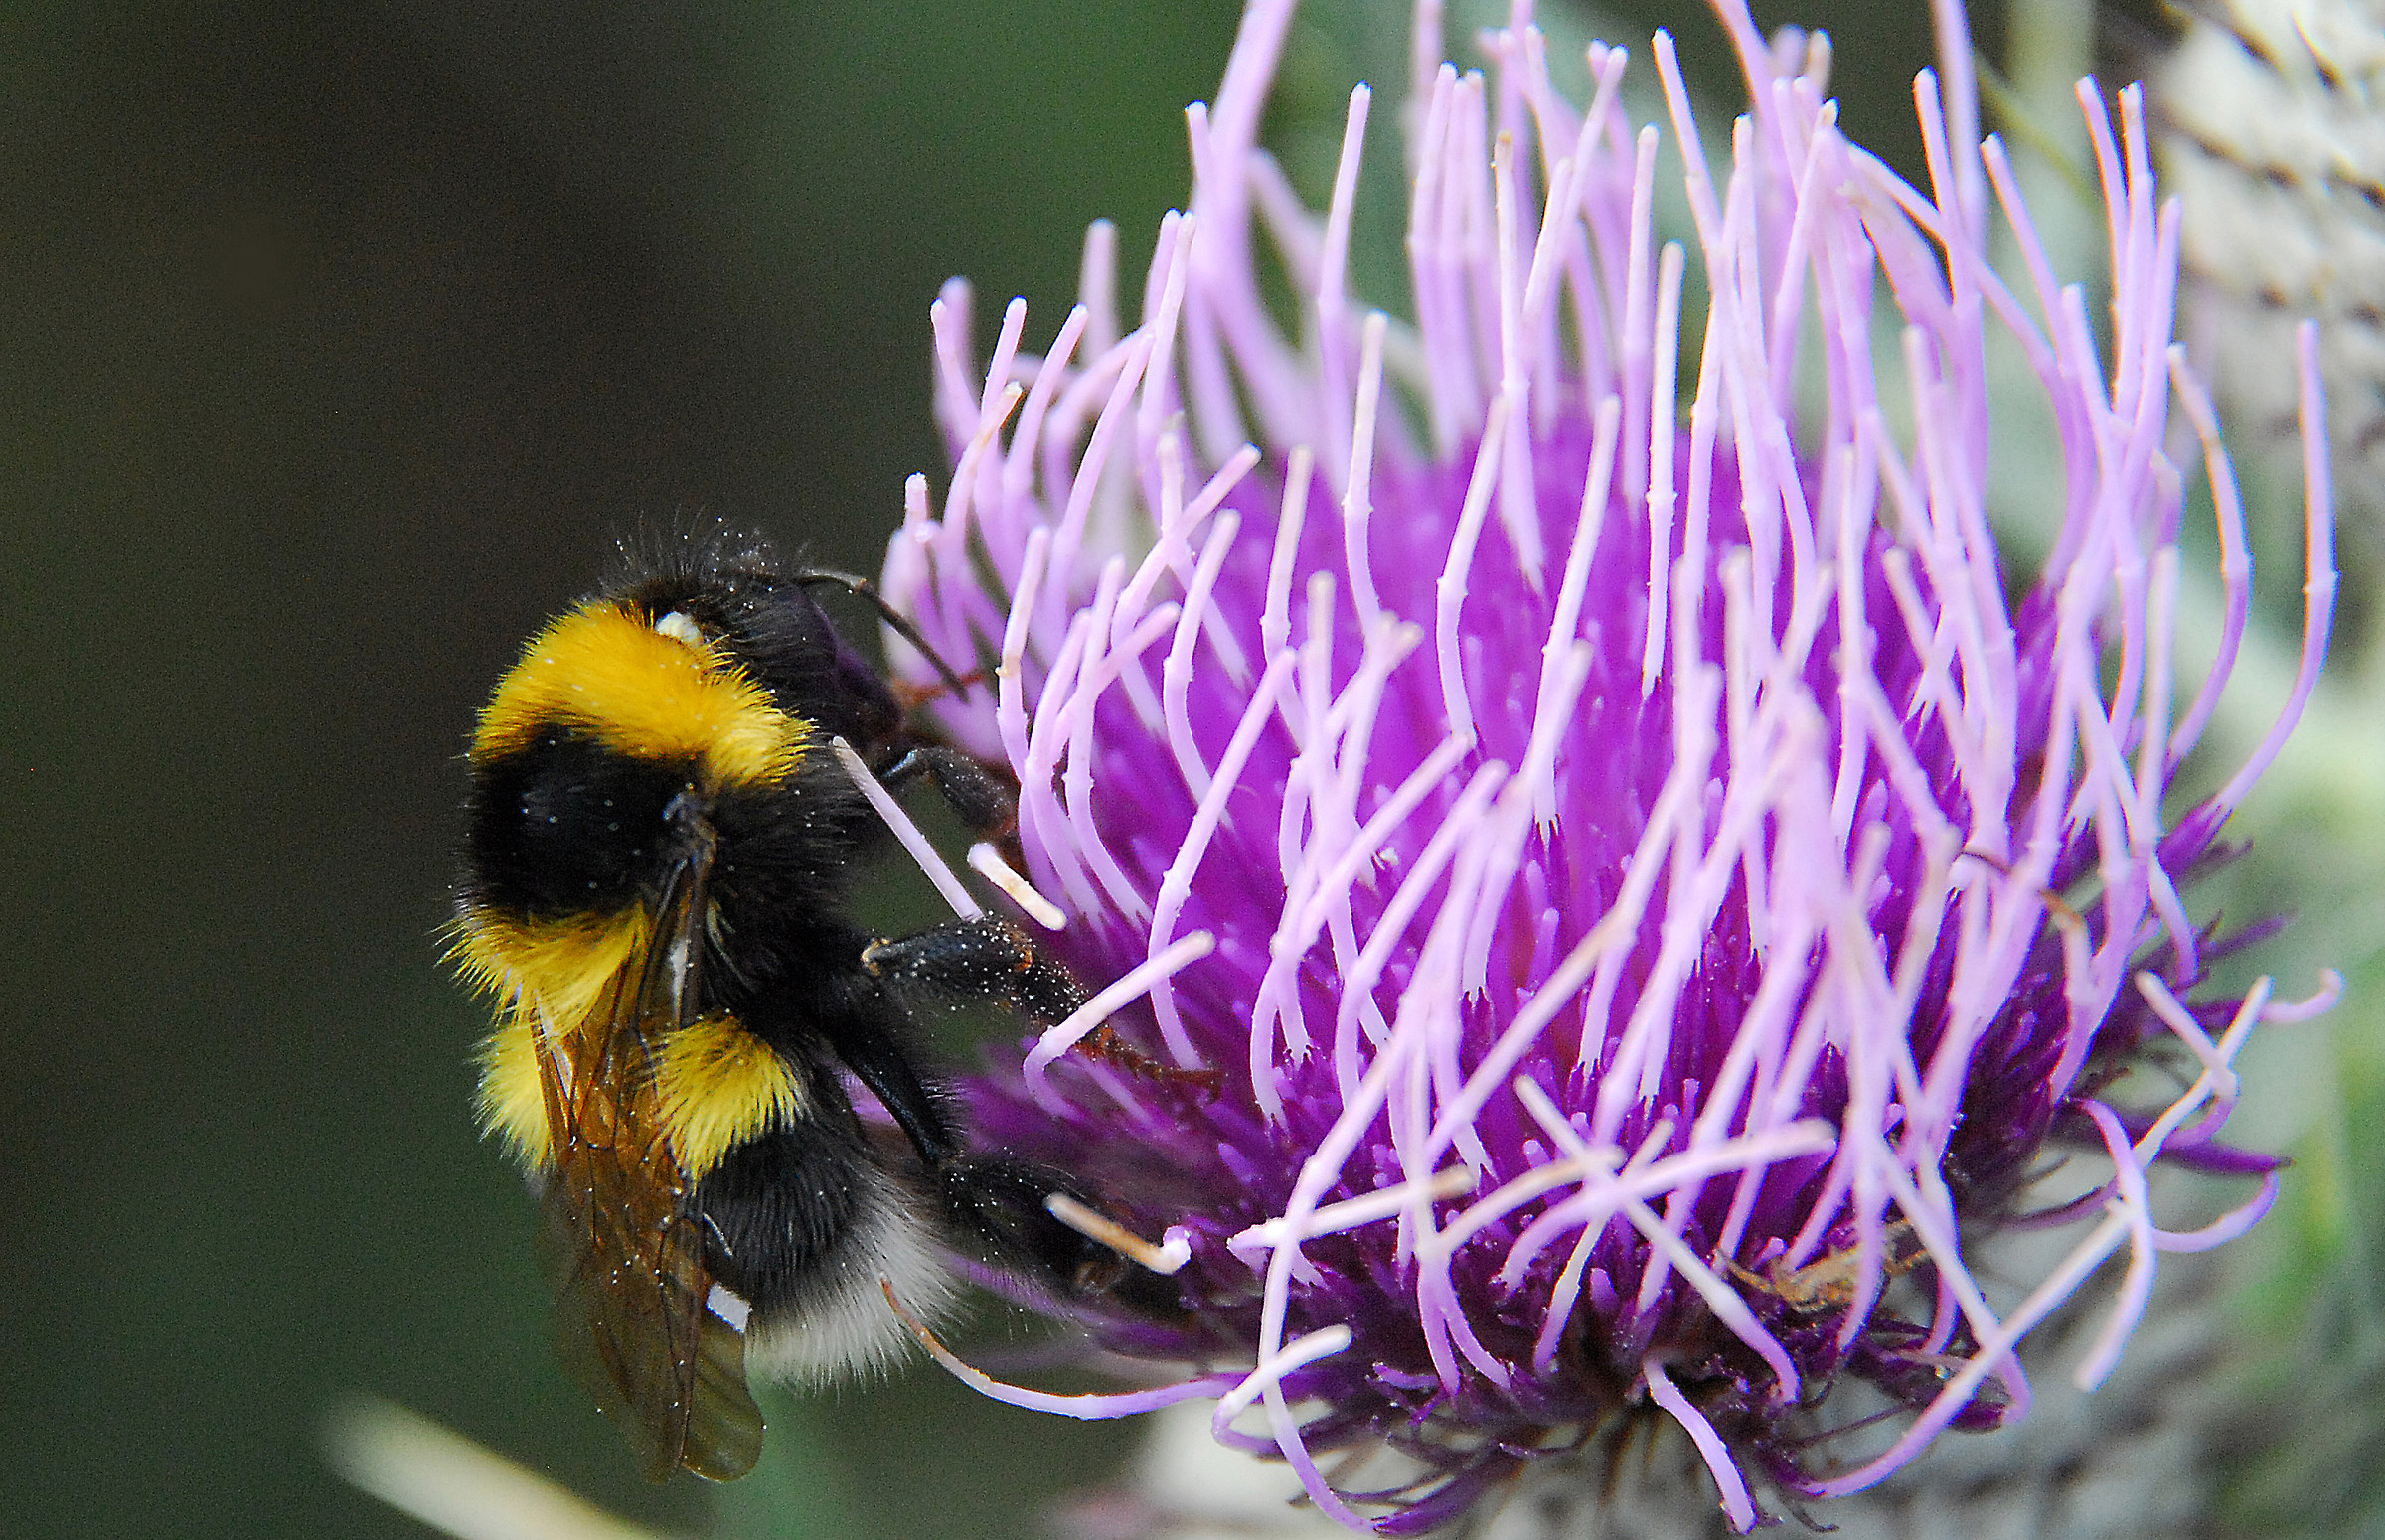 Bumblebee on thistle flower...